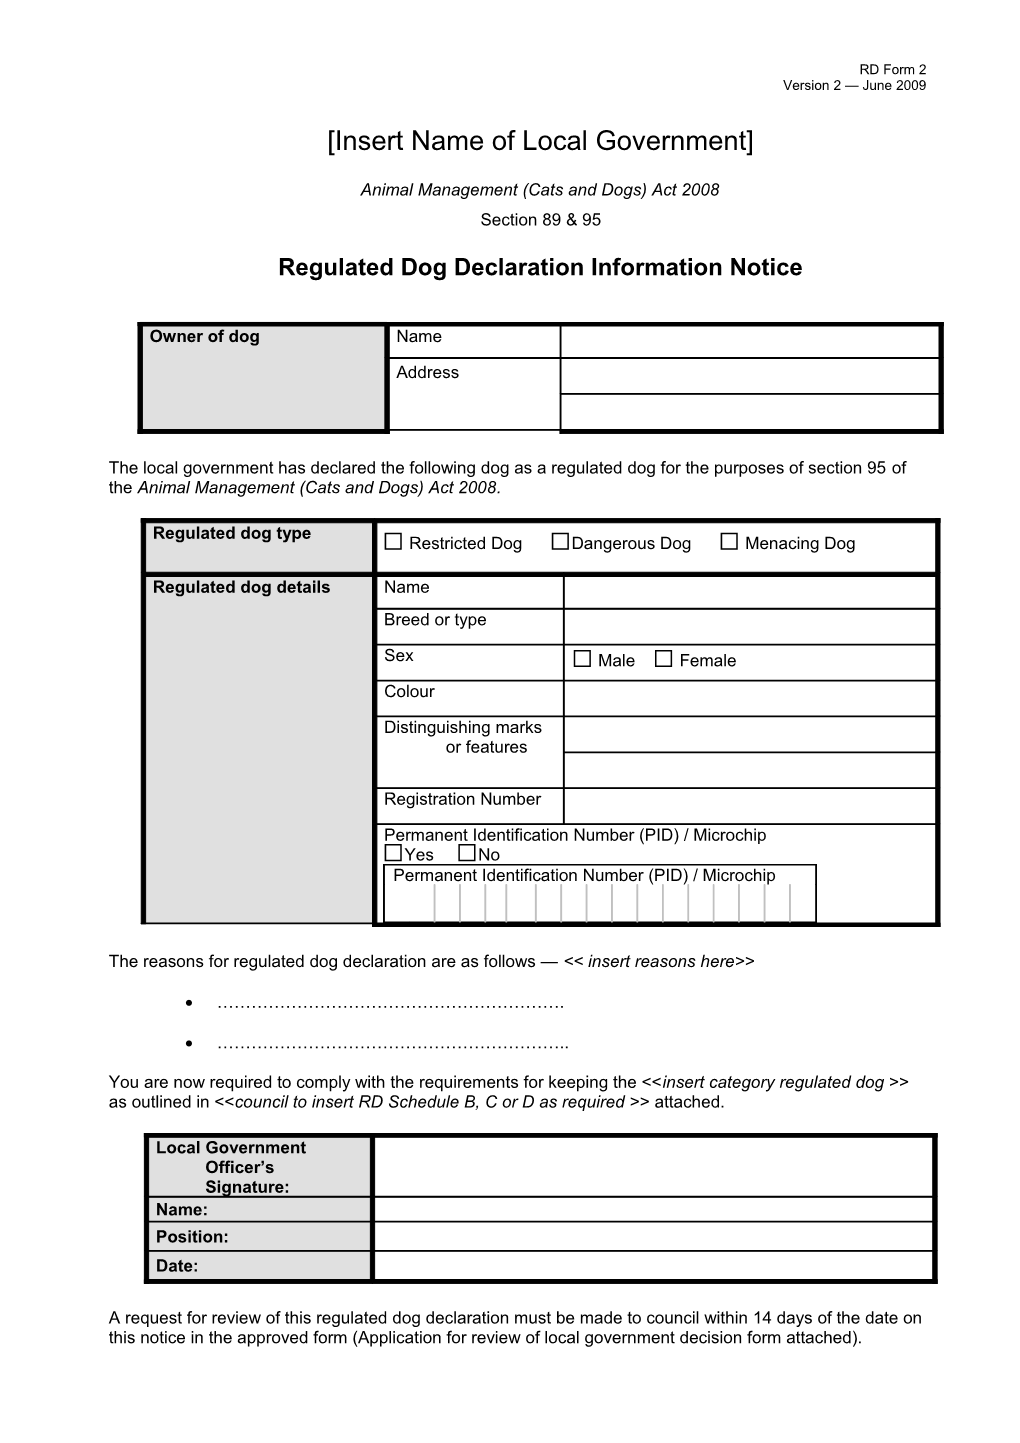 Regulated Dog Declaration Information Notice